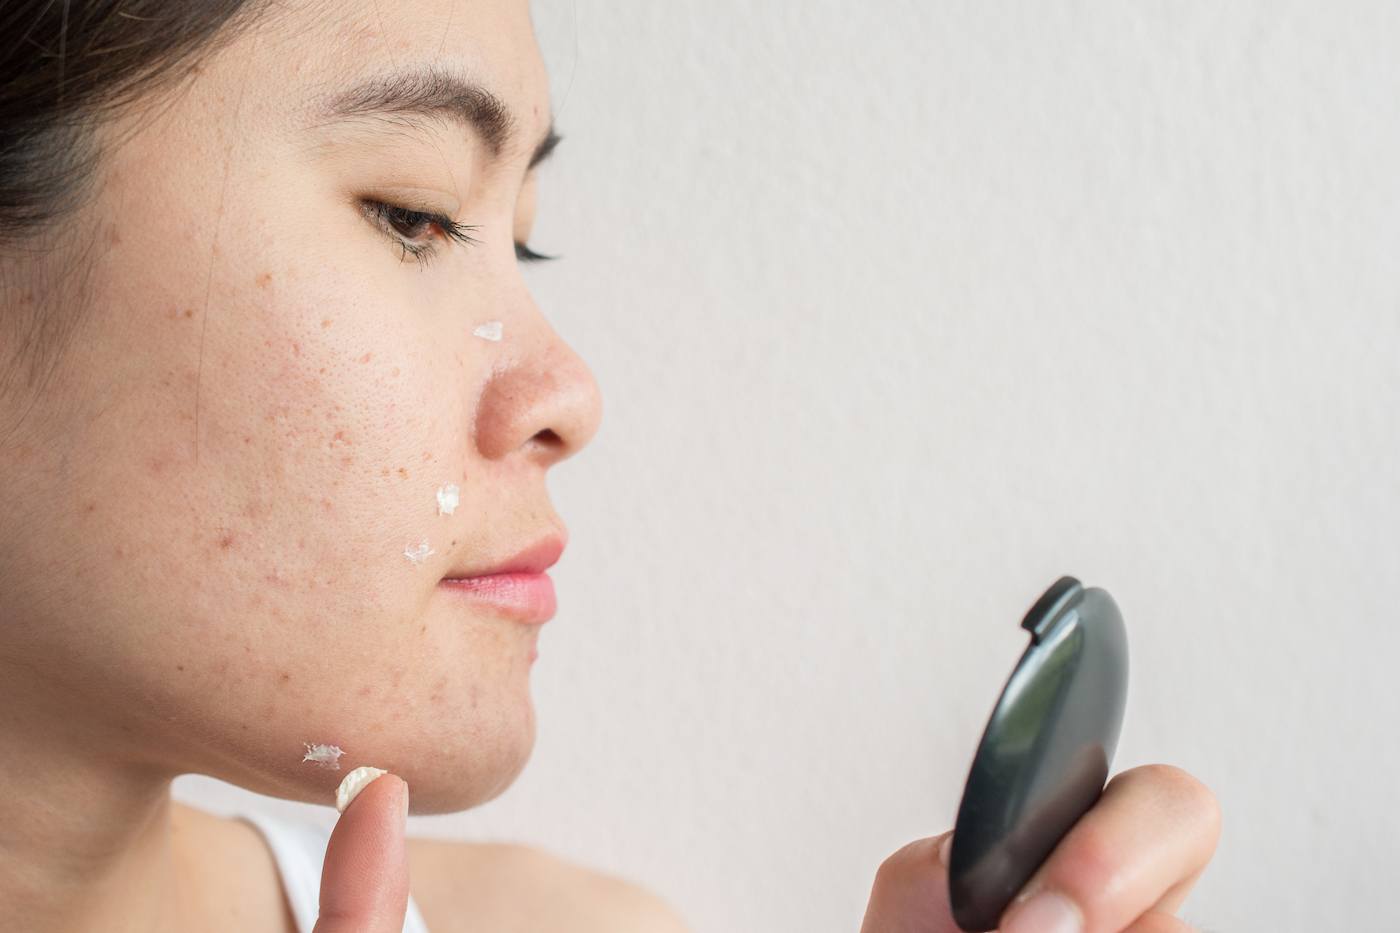 acne treatments for sensitive skin